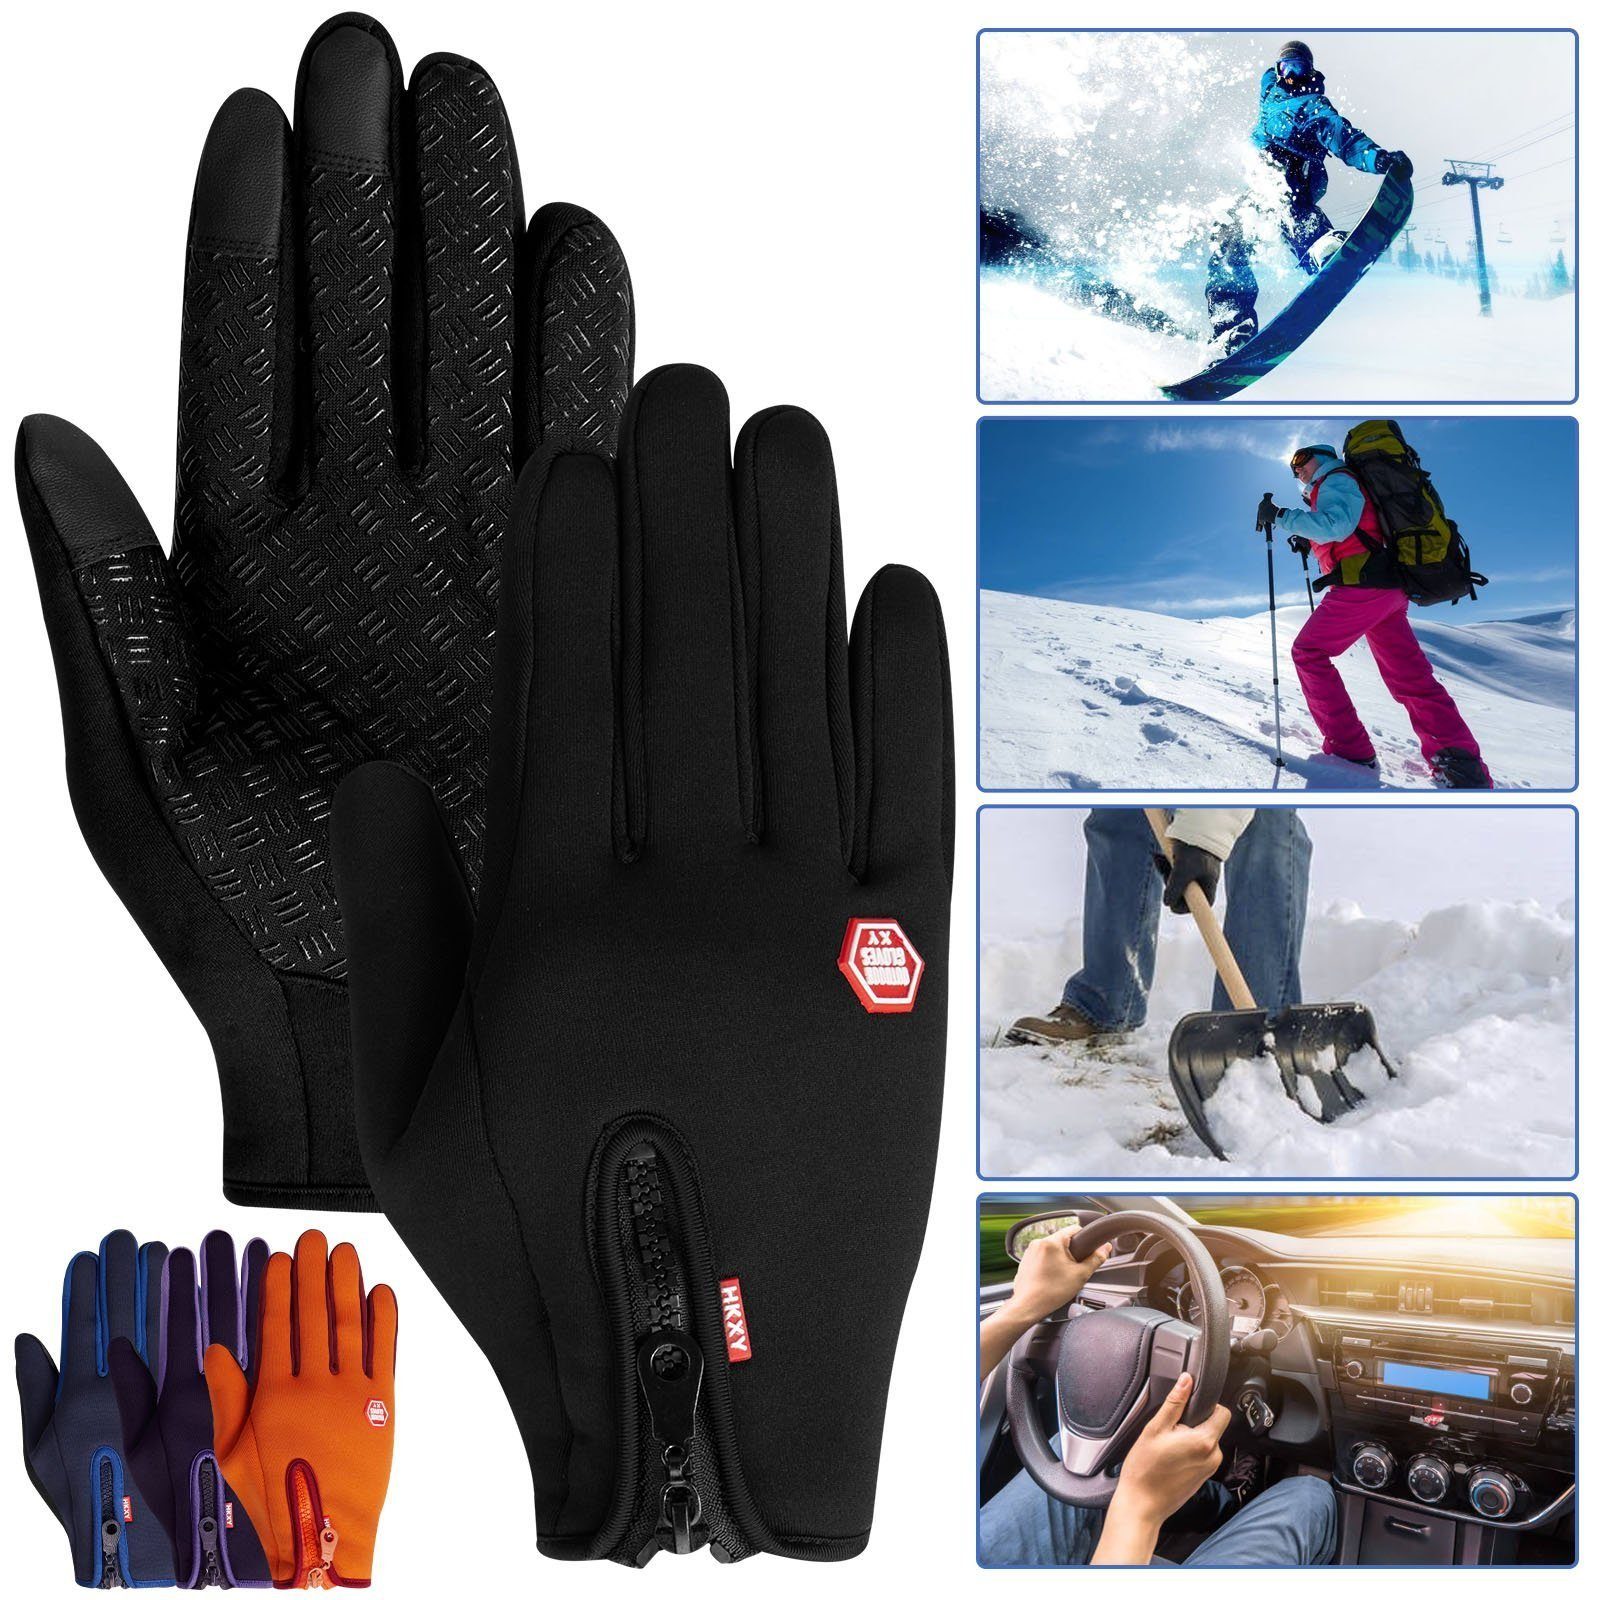 Handschuhe,für Handschuhe Sport Lila Herren Skifahren,Outdoor BTTO Winddicht,Touchscreen Fleecehandschuhe Damen Winter,Skihandschuhe,Thermo